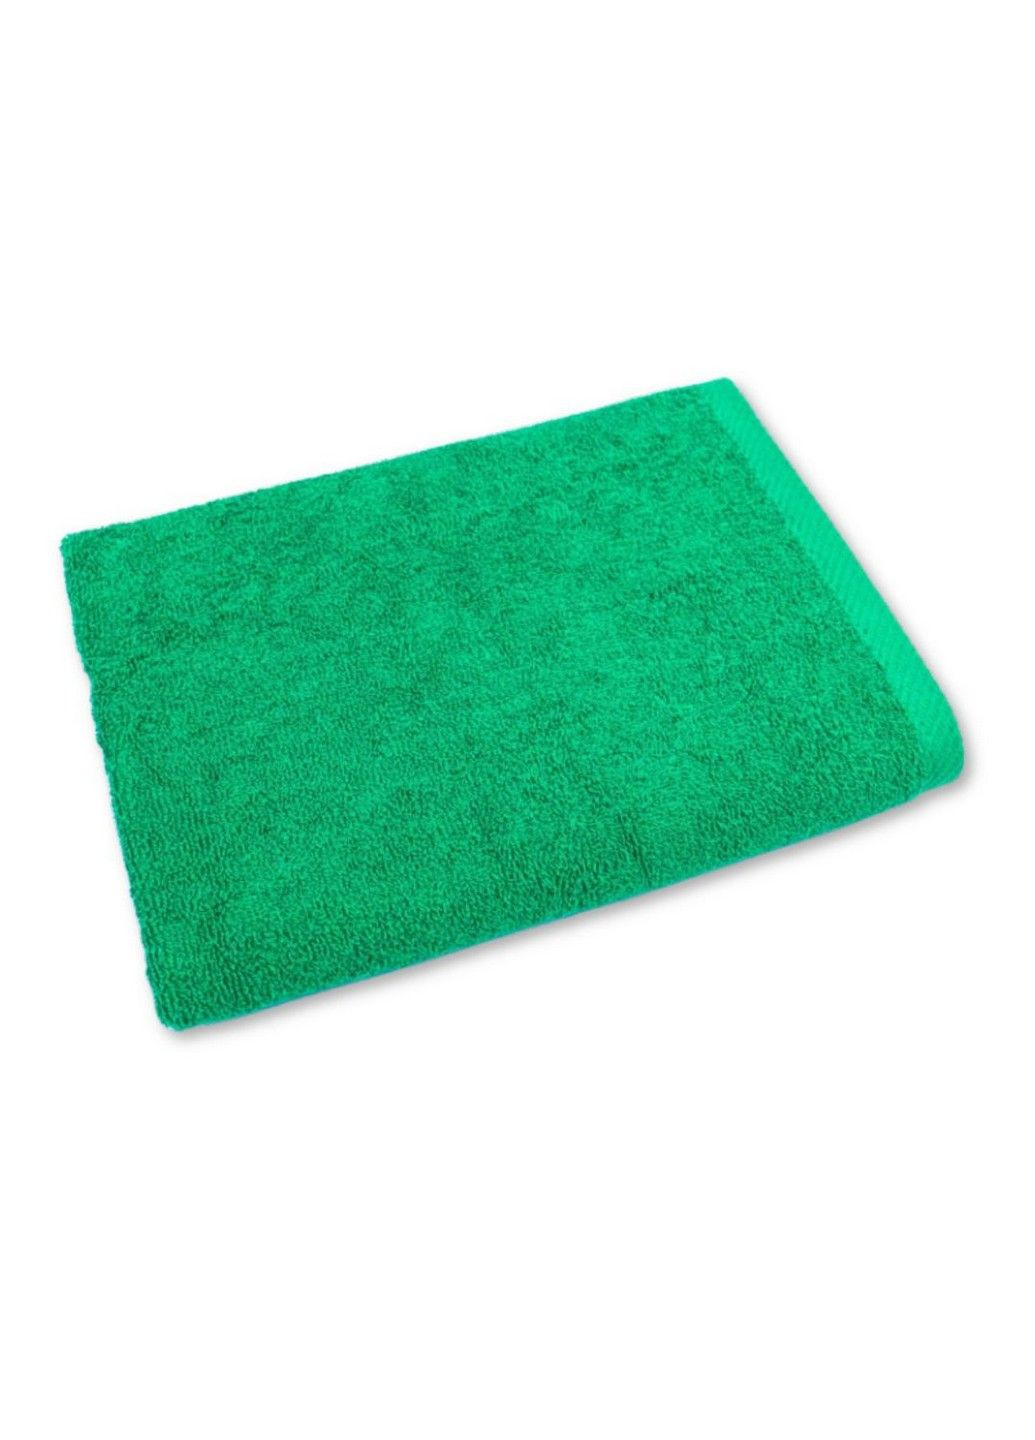 GM Textile полотенце махровое, 50*90 см зеленый производство - Узбекистан